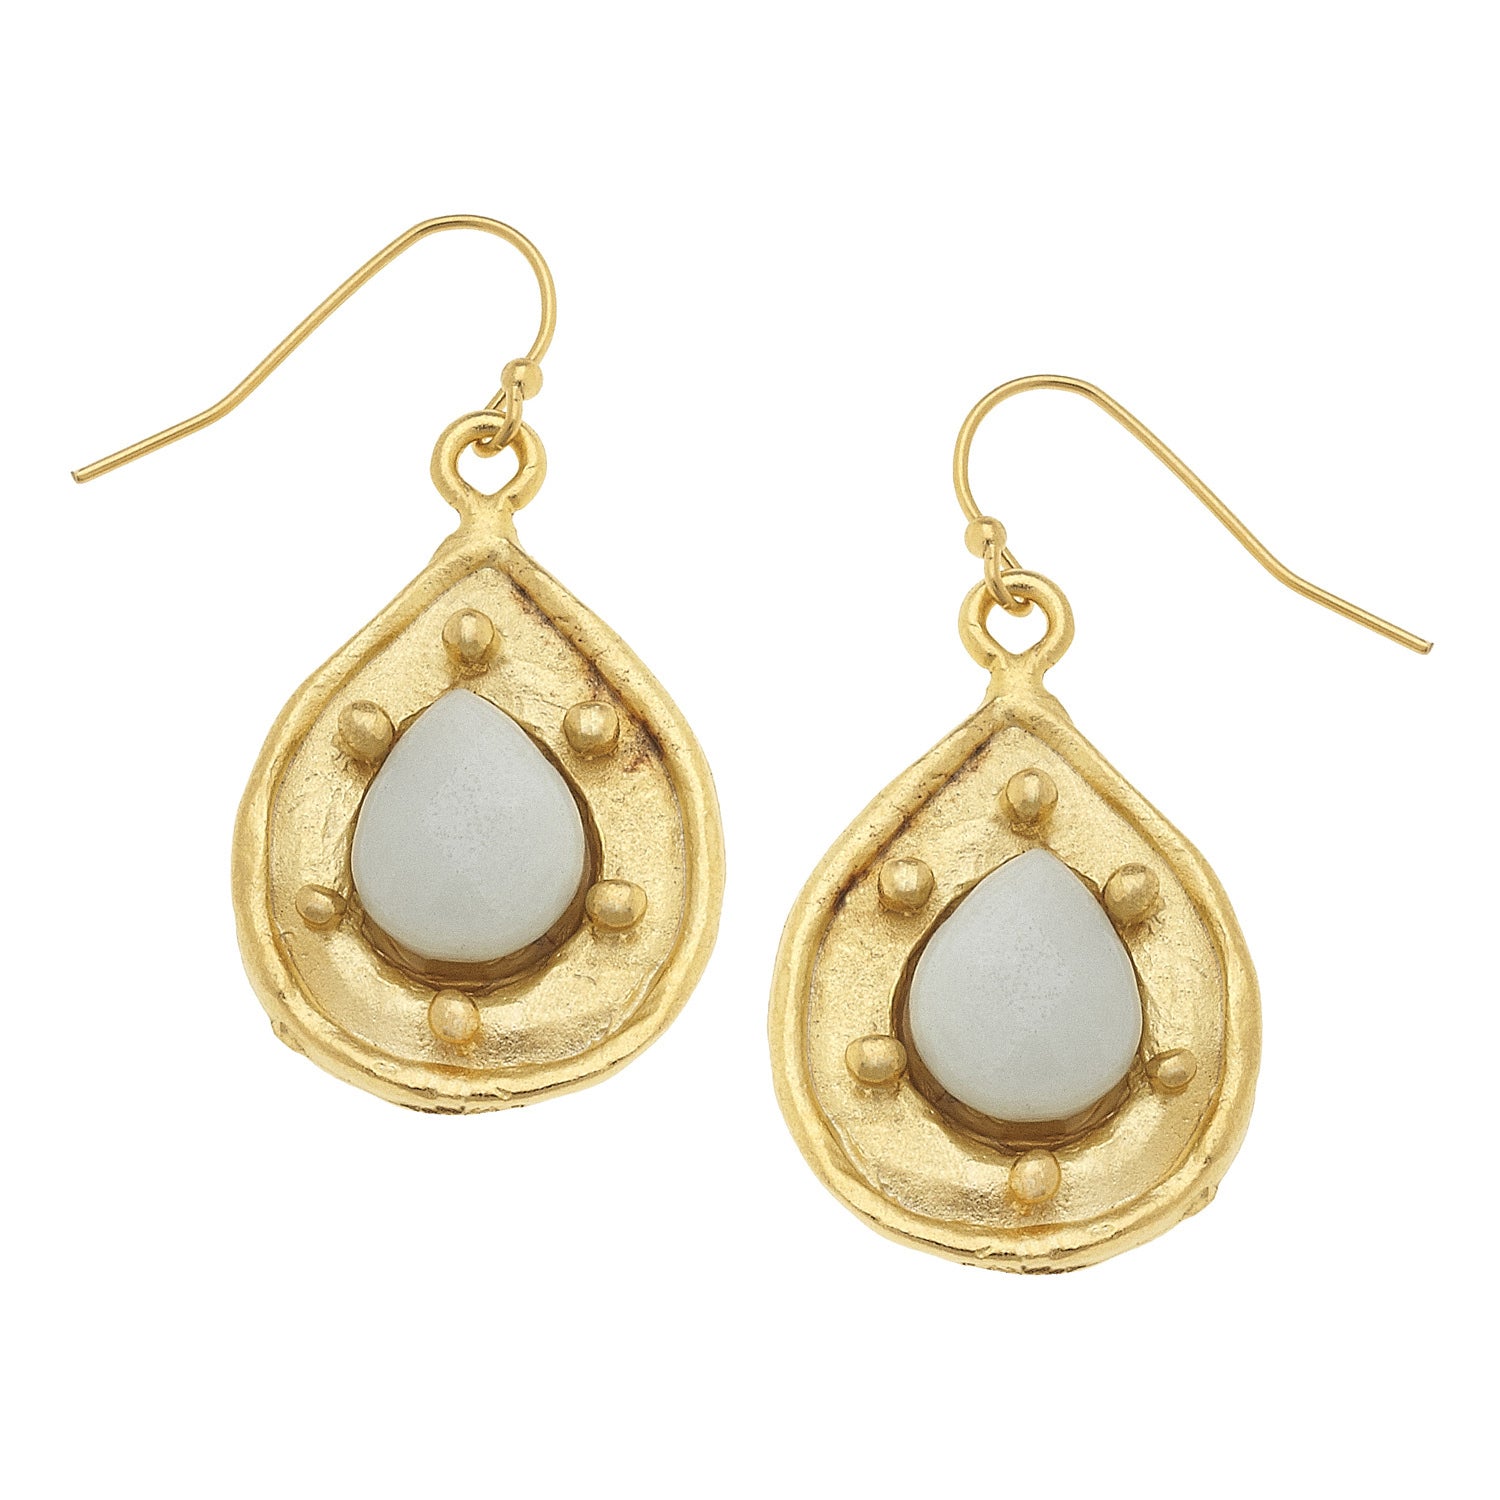 Susan Shaw Handcast Gold Teardrop with Genuine amazonite Stone Earrings